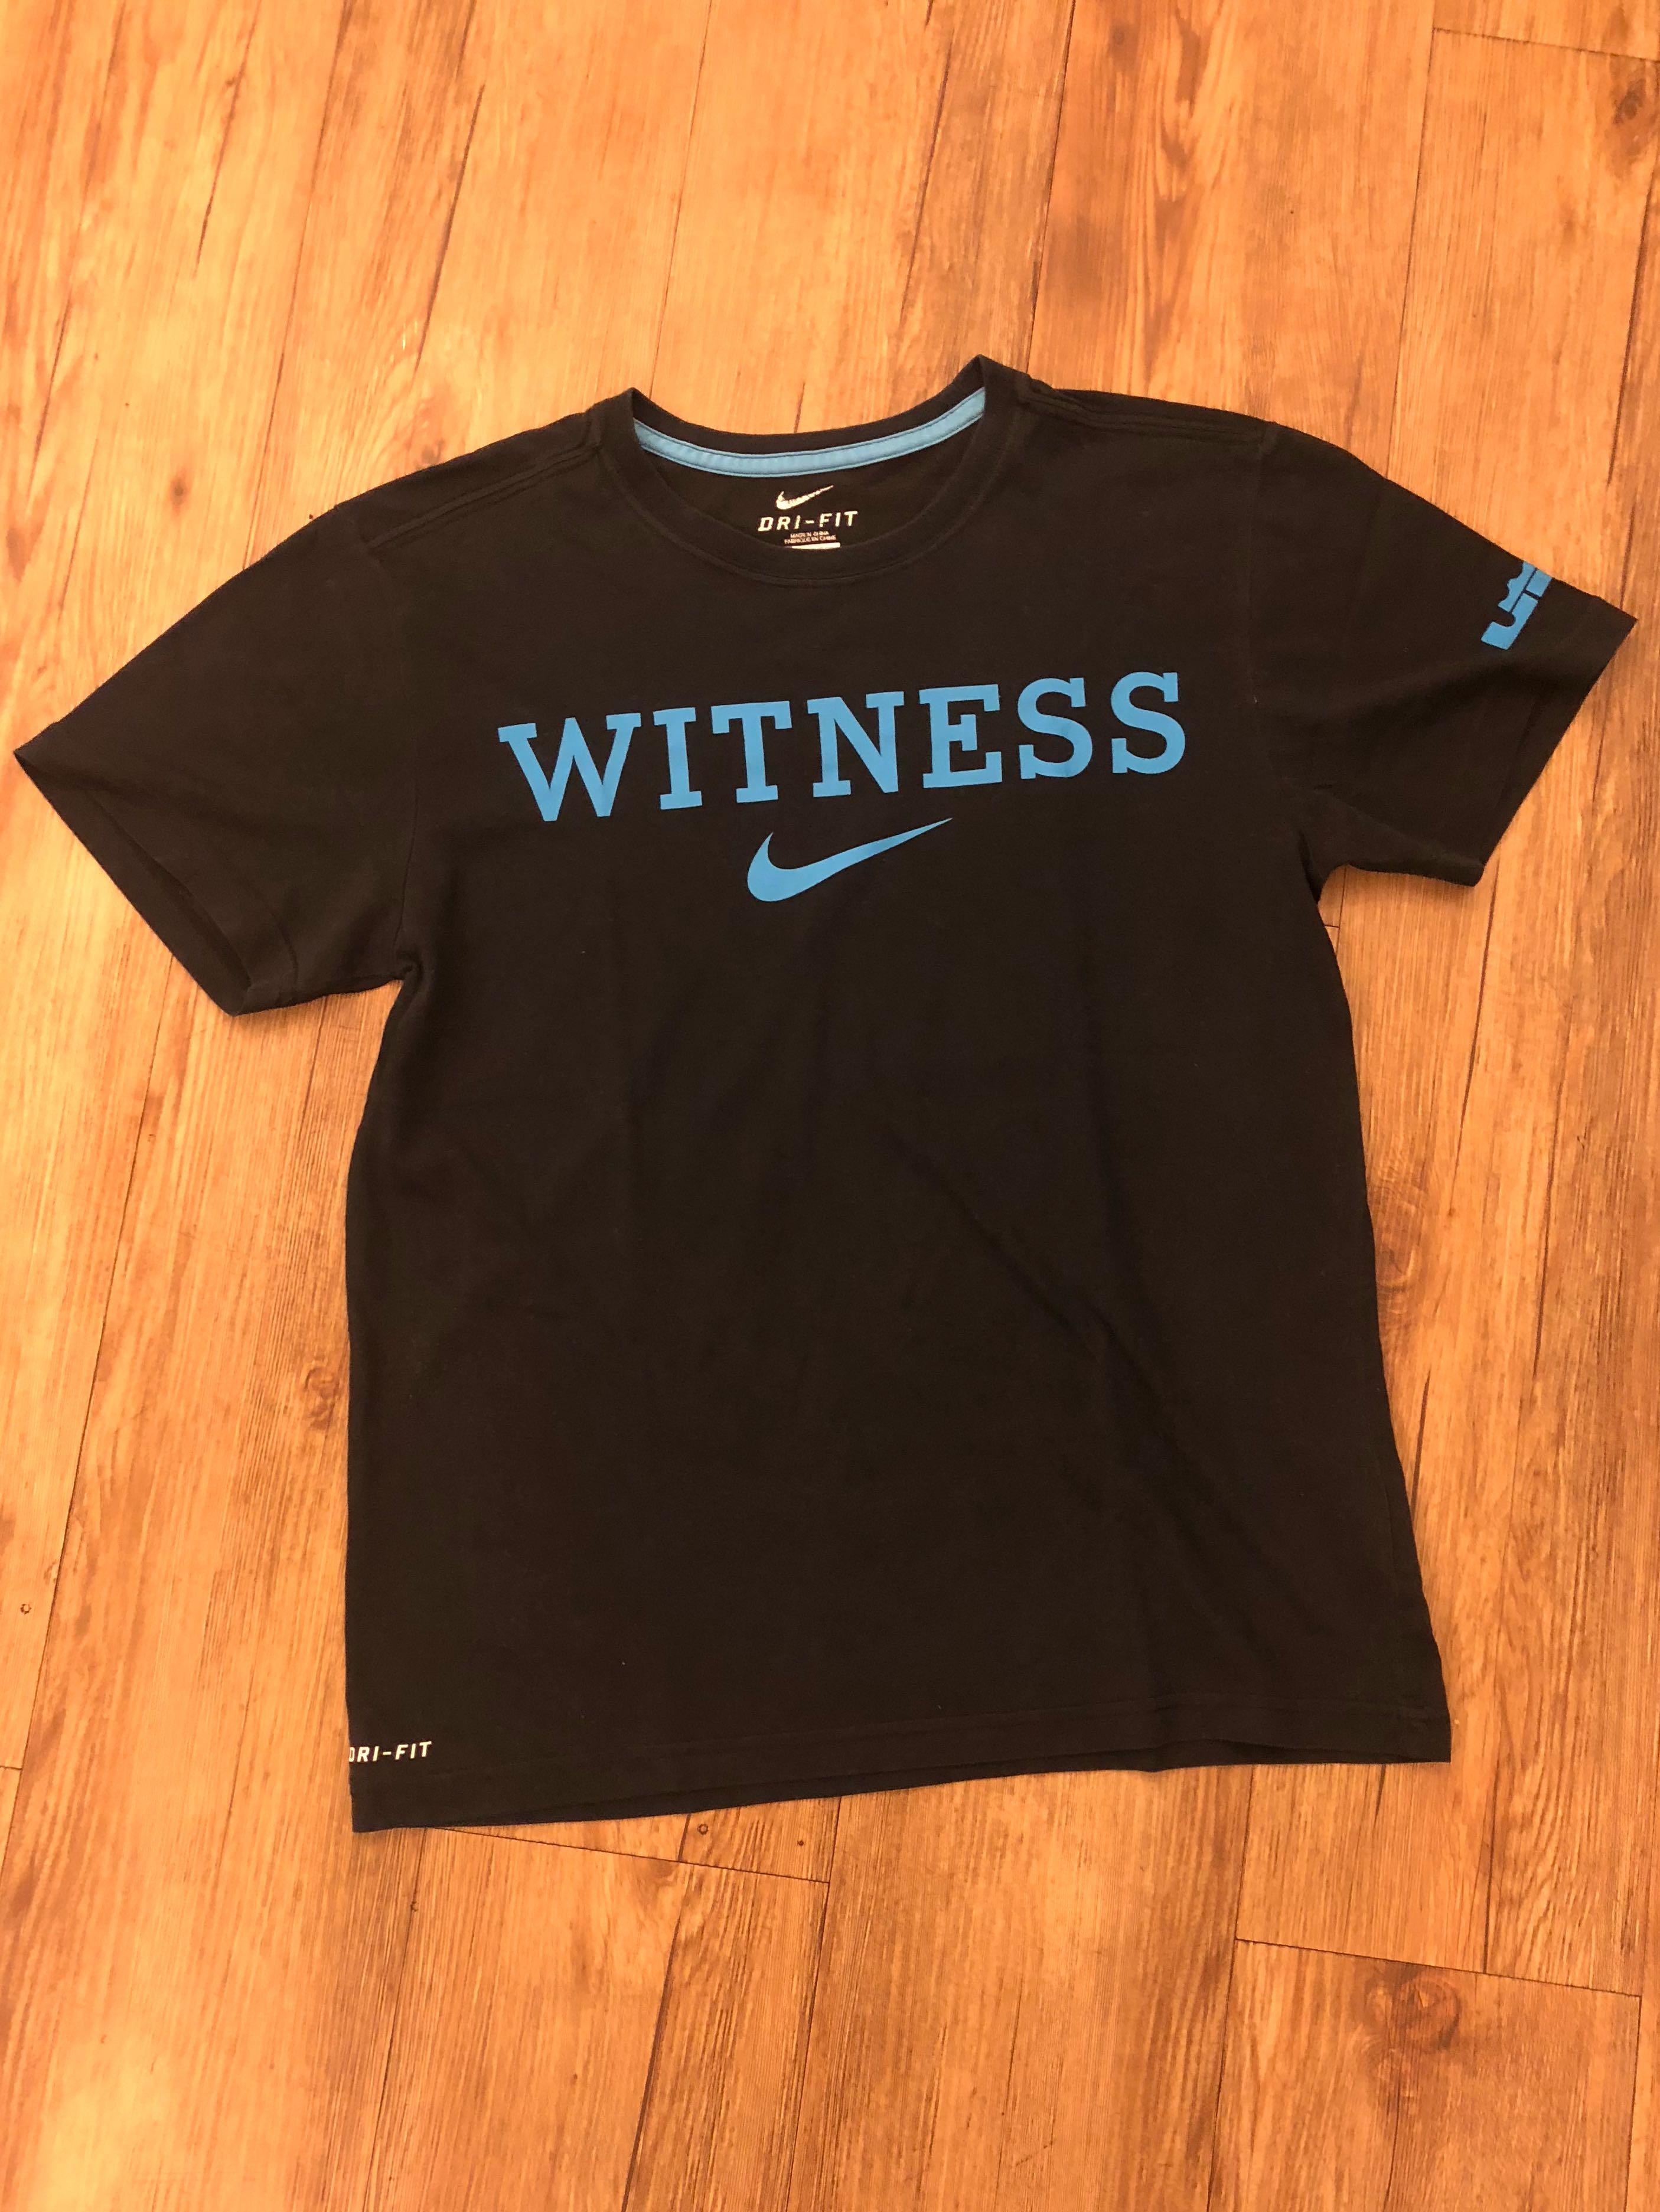 lebron witness shirt